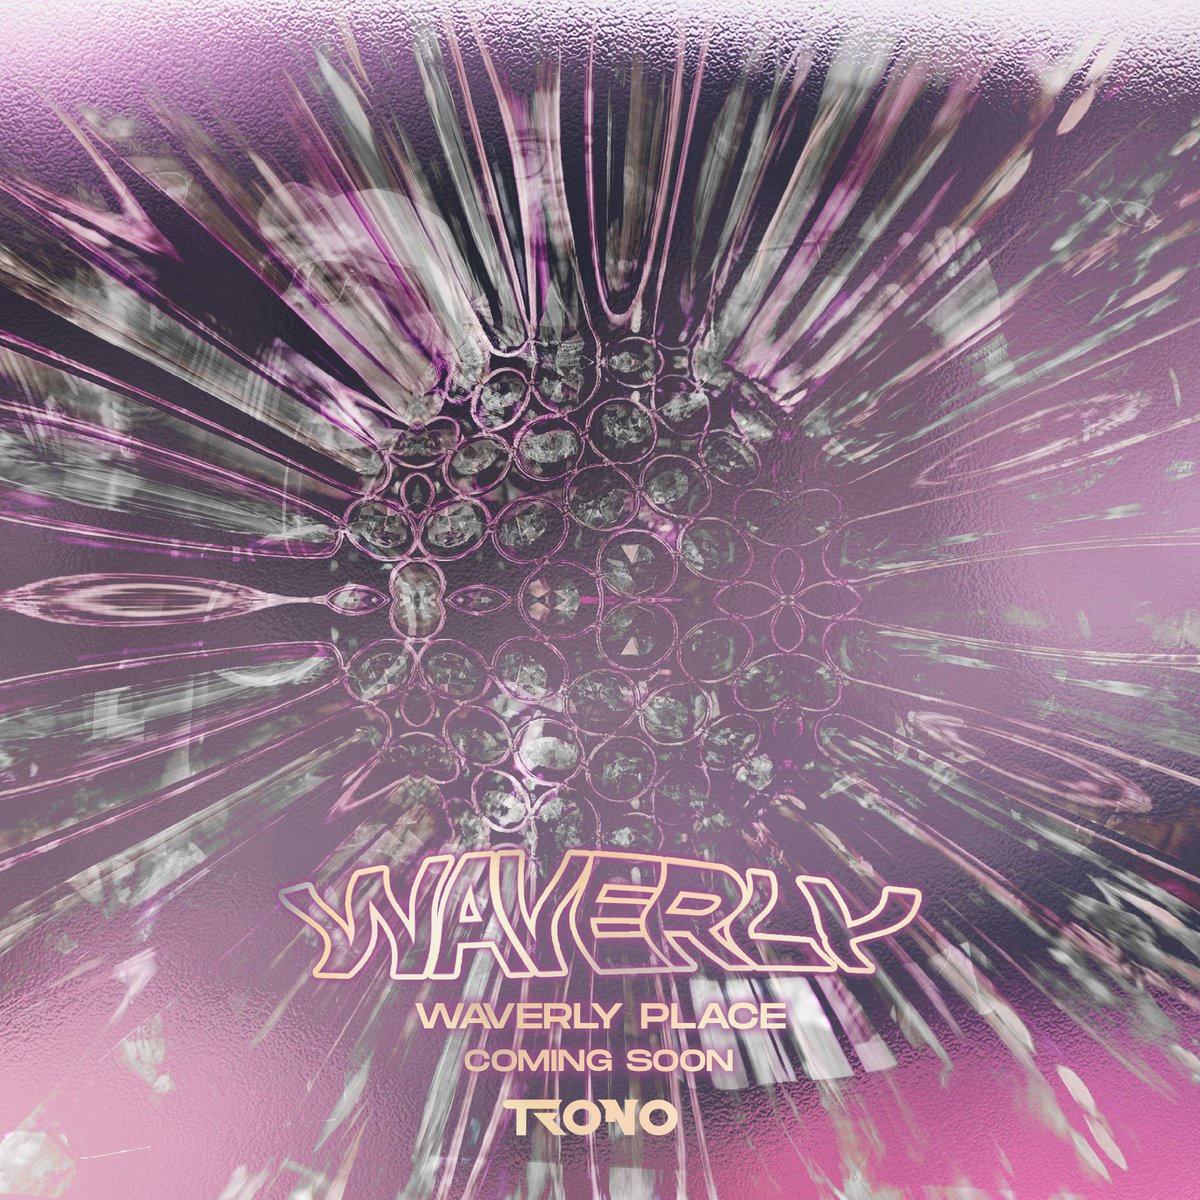 EP Waverly Place disponível brevemente 🤯🔥
@trono_oficial 
#WaverlyPlace
#TRONO2k21